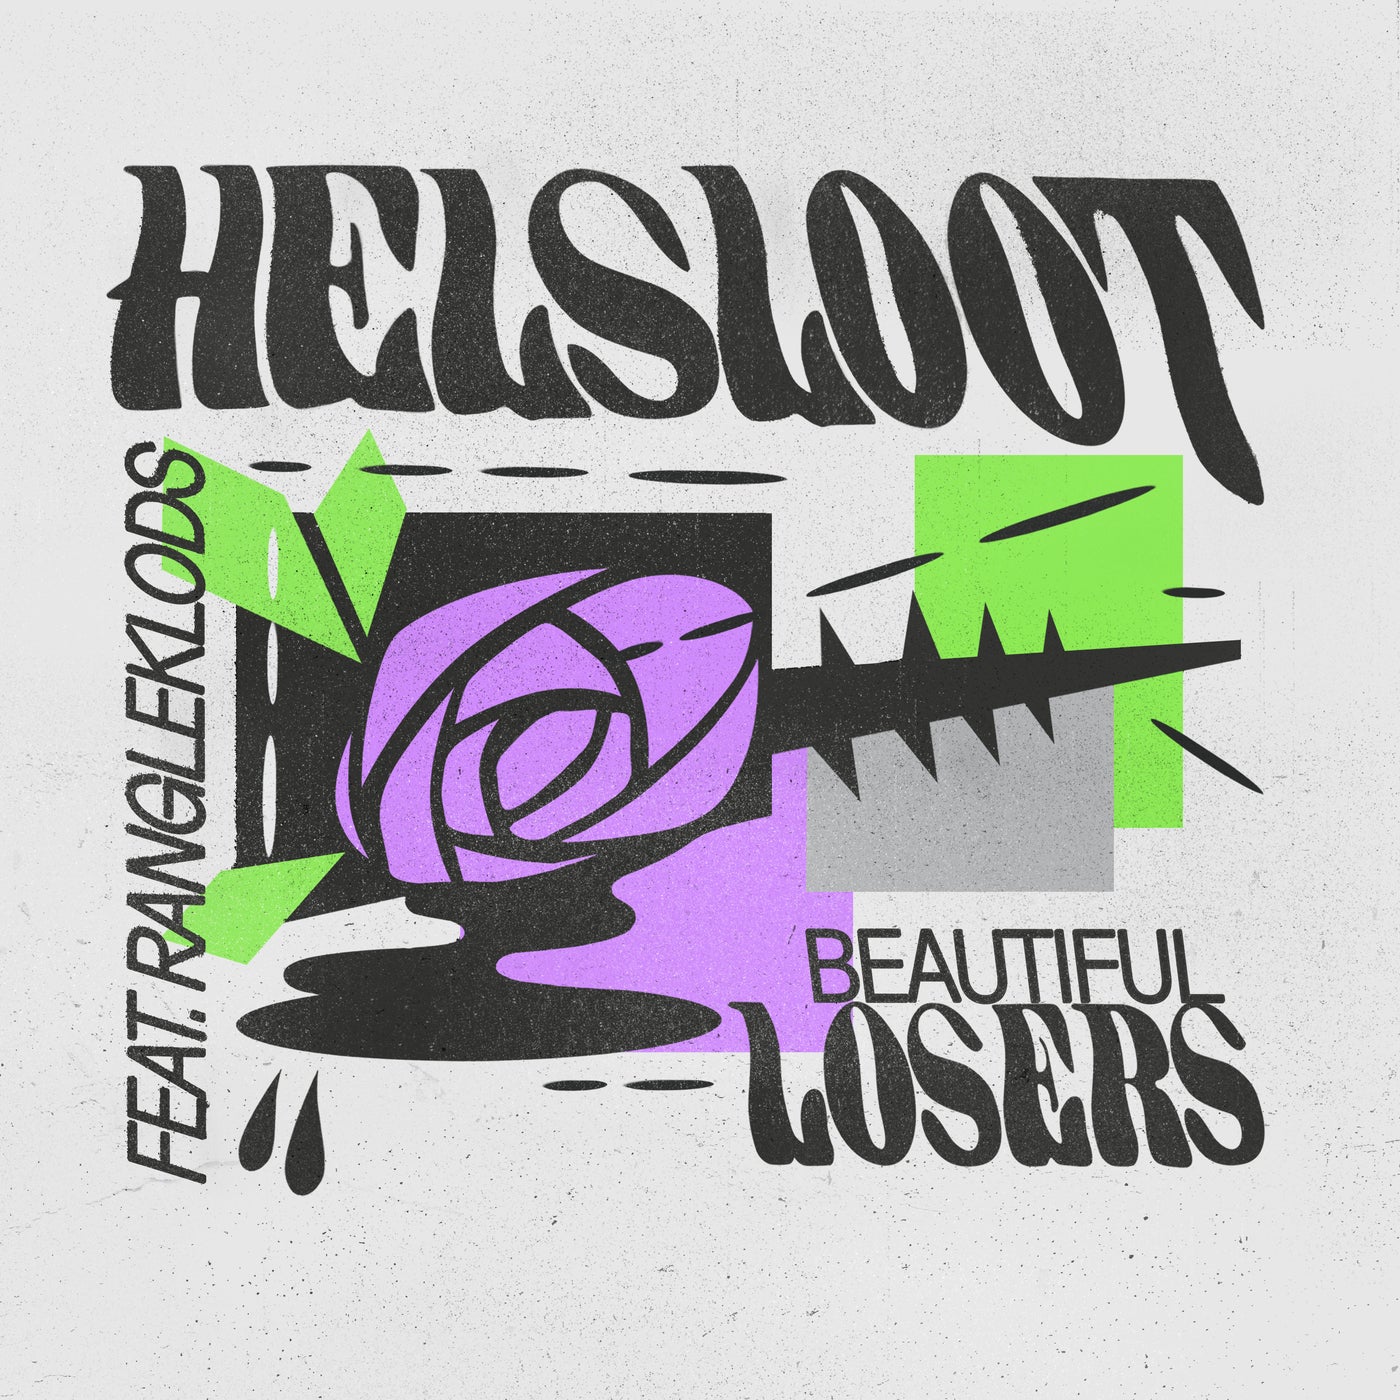 Rangleklods, Helsloot - Beautiful Losers (feat. Rangleklods) (Extended Mix)